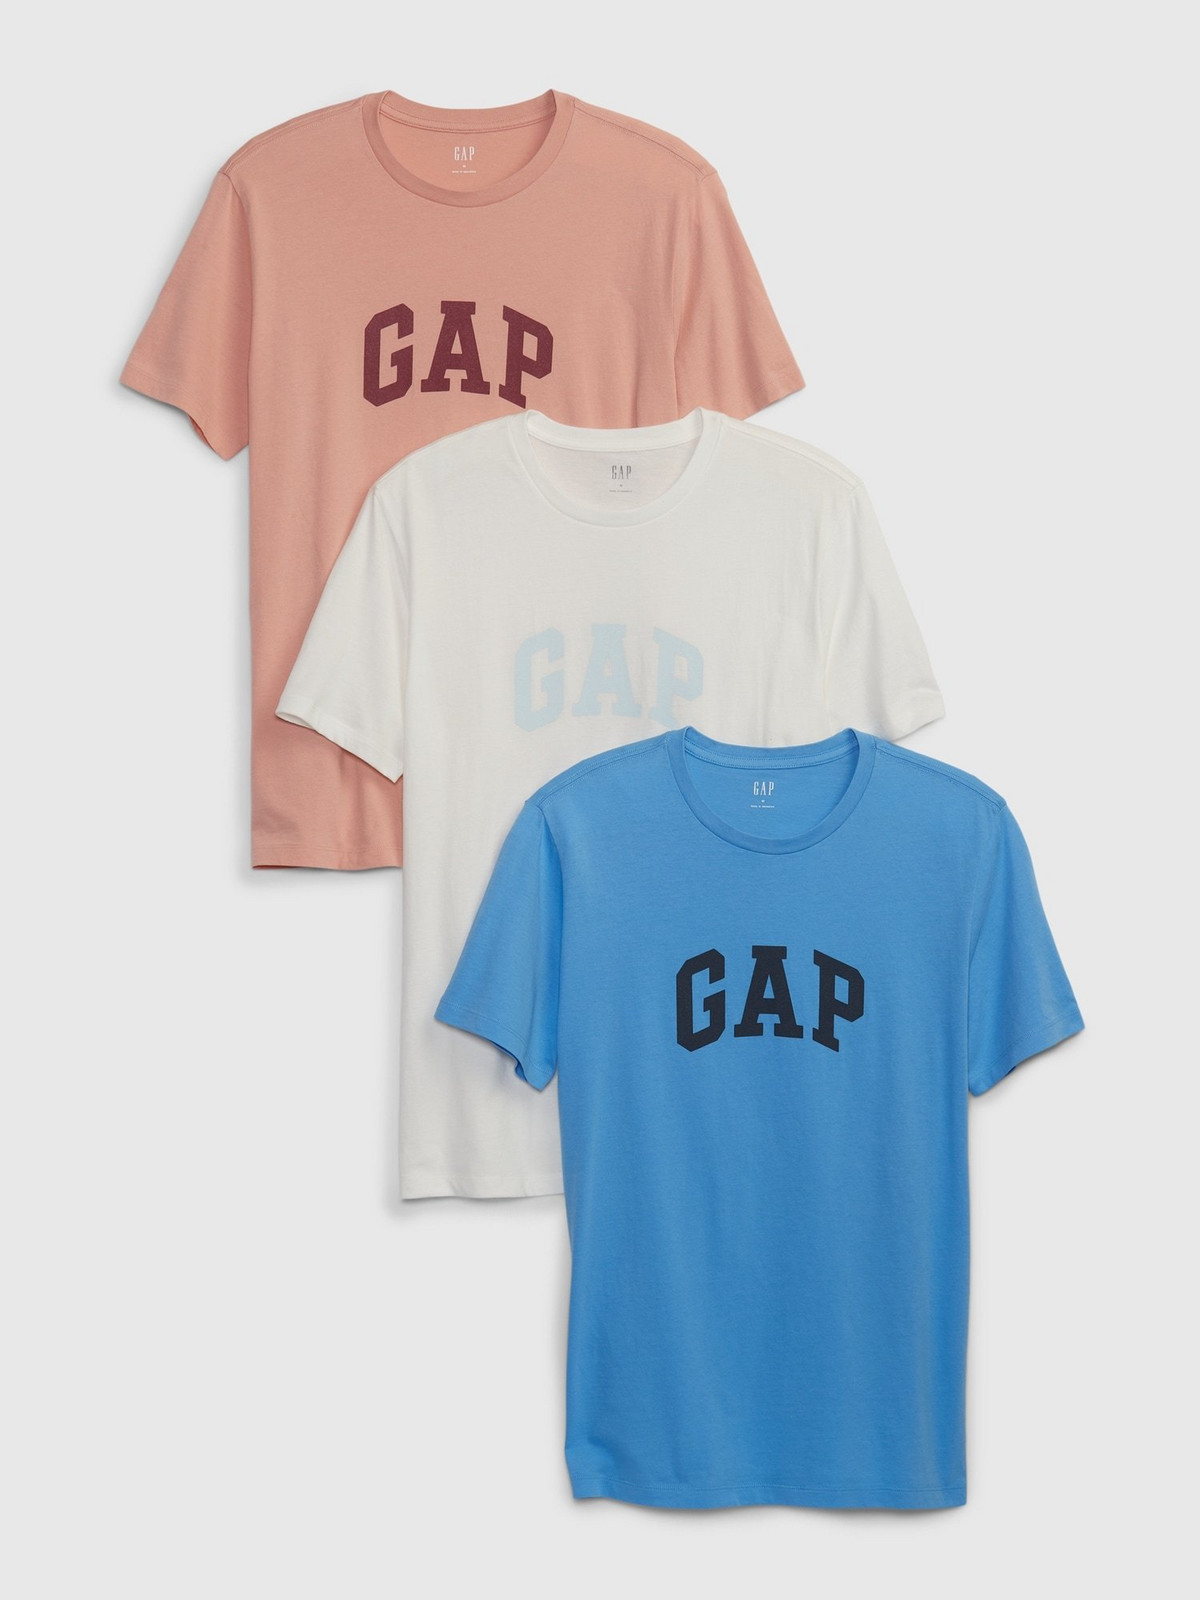 Barevné pánské tričko s logem GAP, 3ks